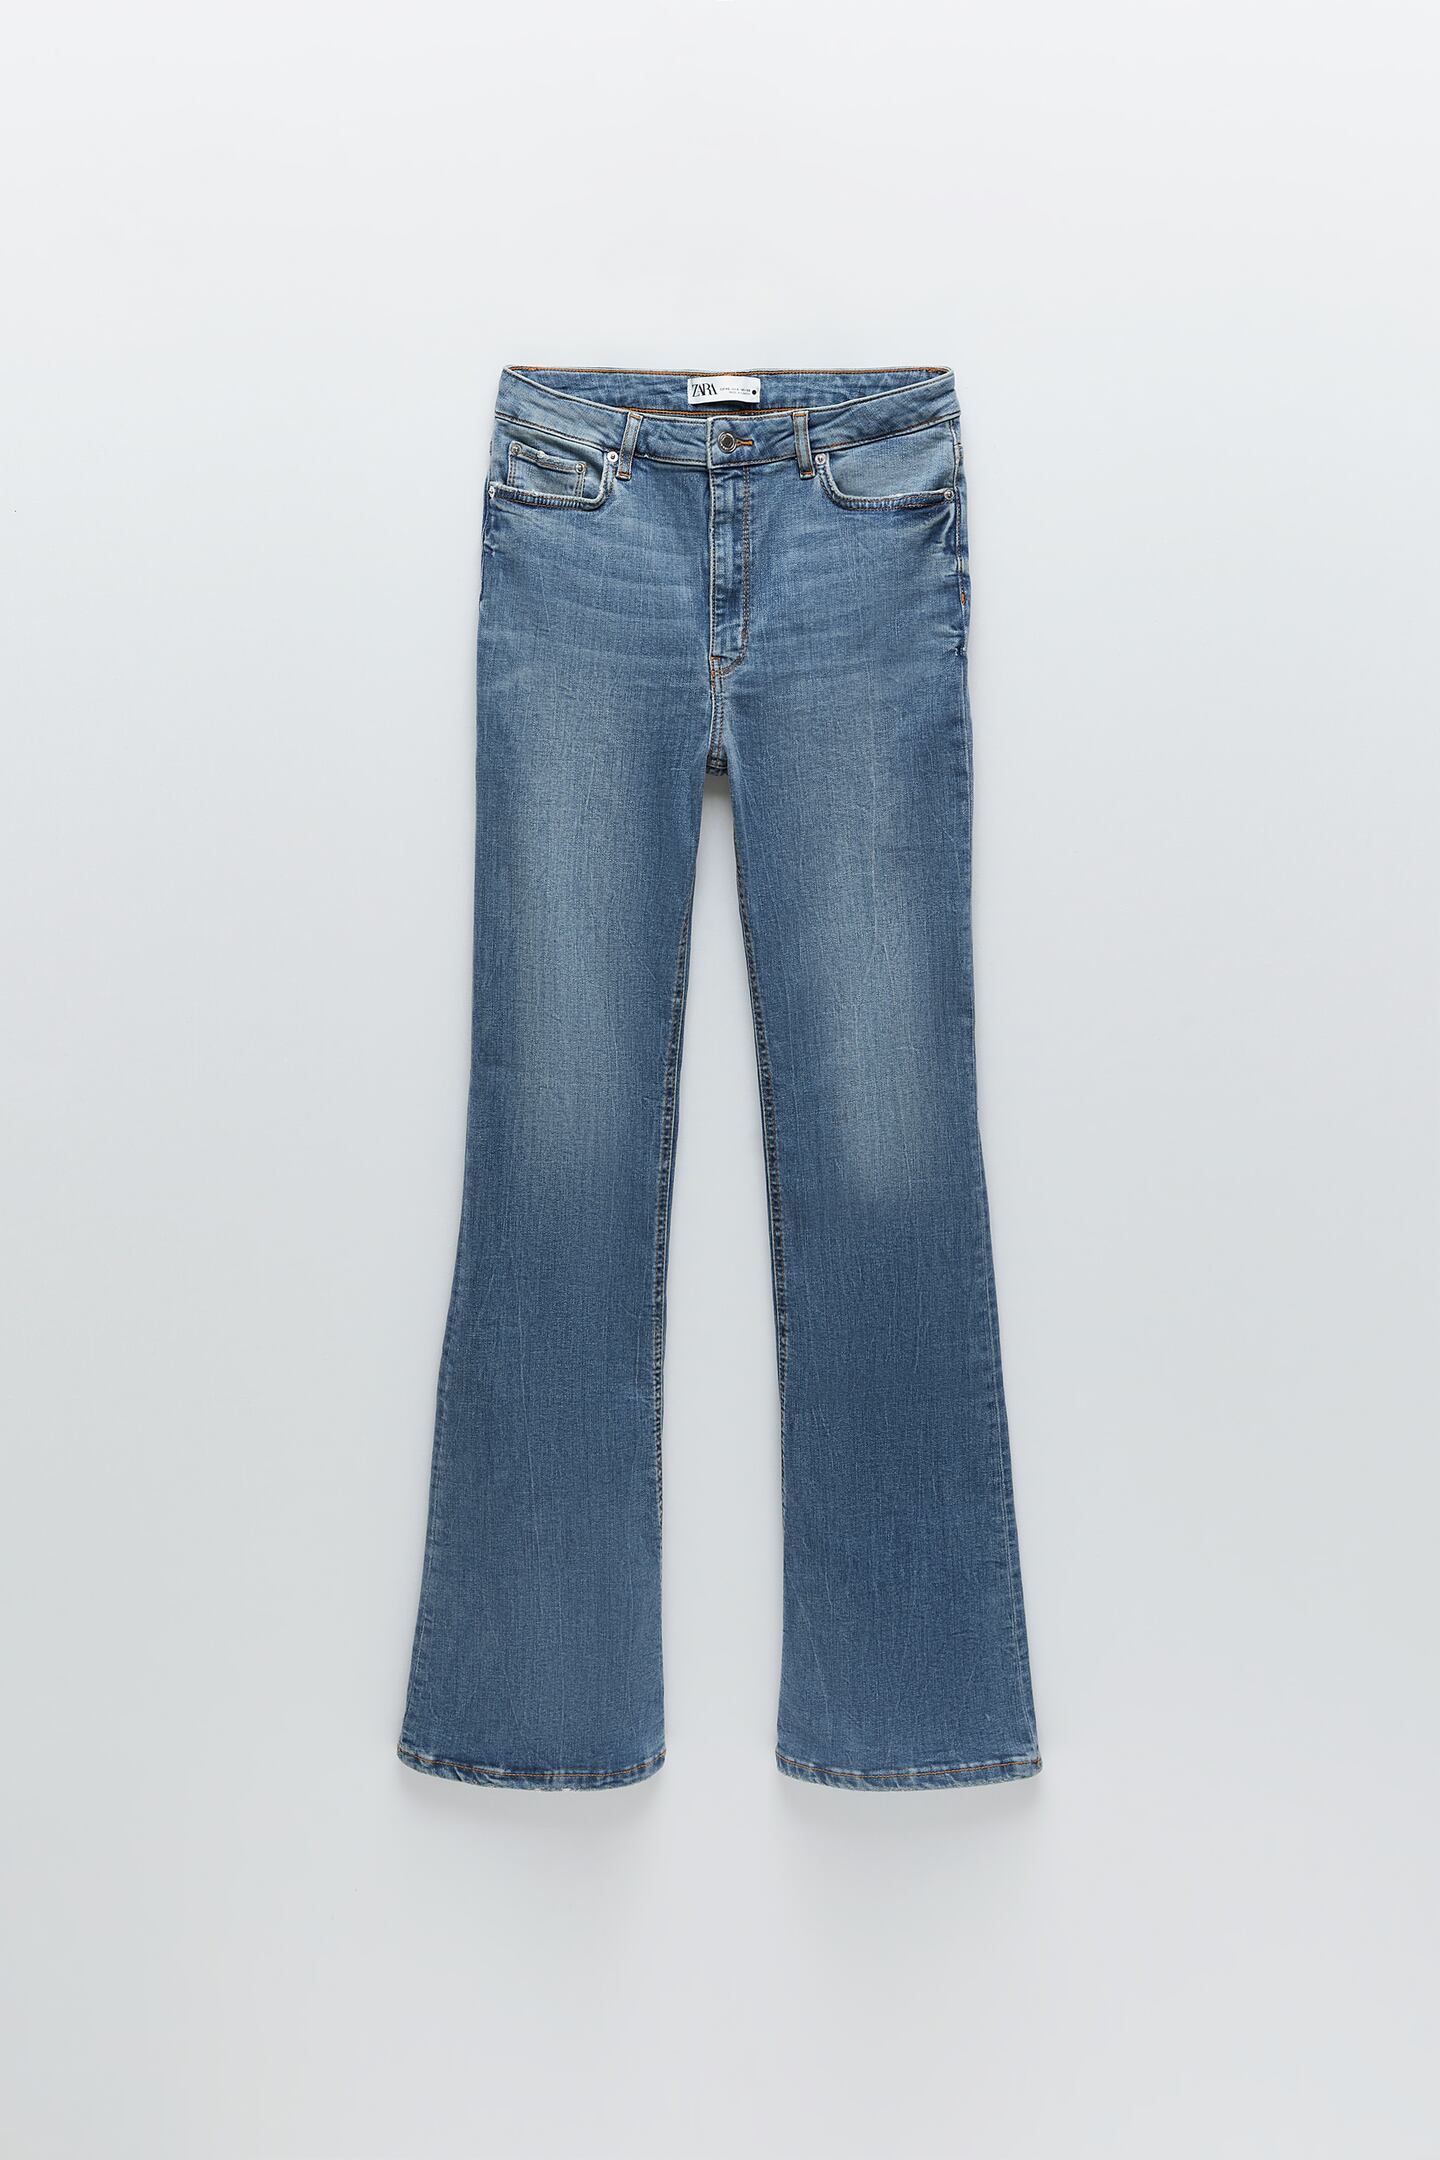 Jeans Premium Hw Skinny flaredetalle. 29,95 euros. Zara.